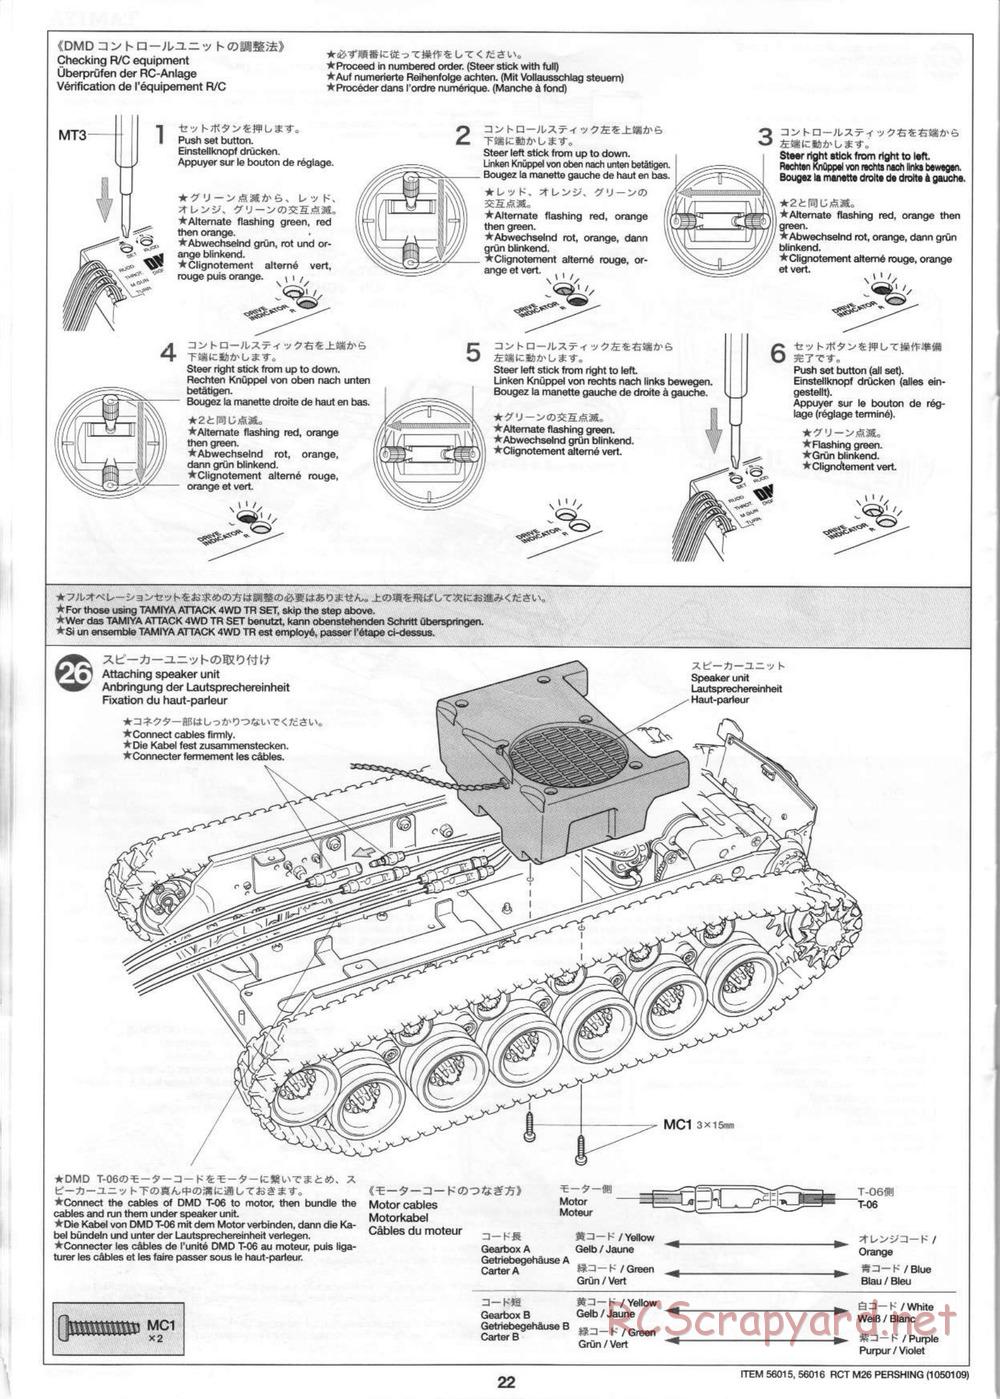 Tamiya - M26 Pershing - 1/16 Scale Chassis - Manual - Page 22